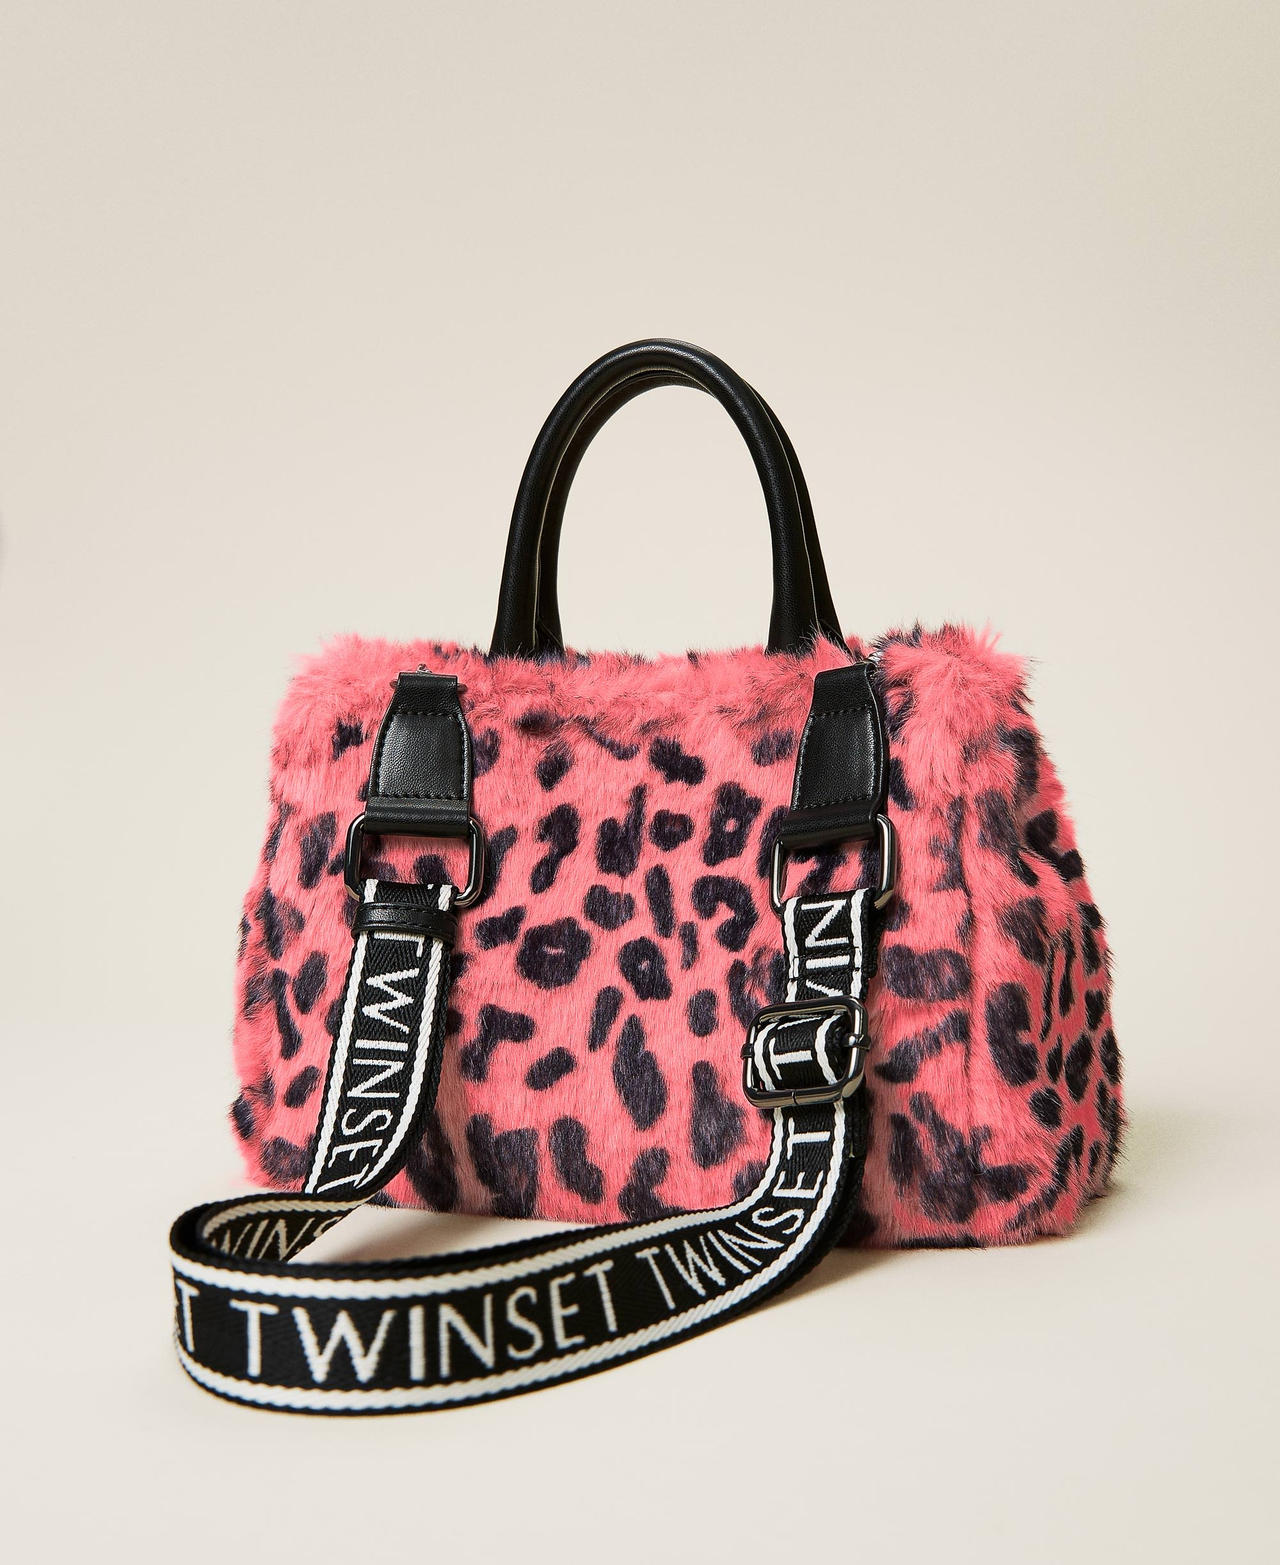 Animal print bag with logo Carmine Rose Leopard Spot Girl 212GJ7943-03